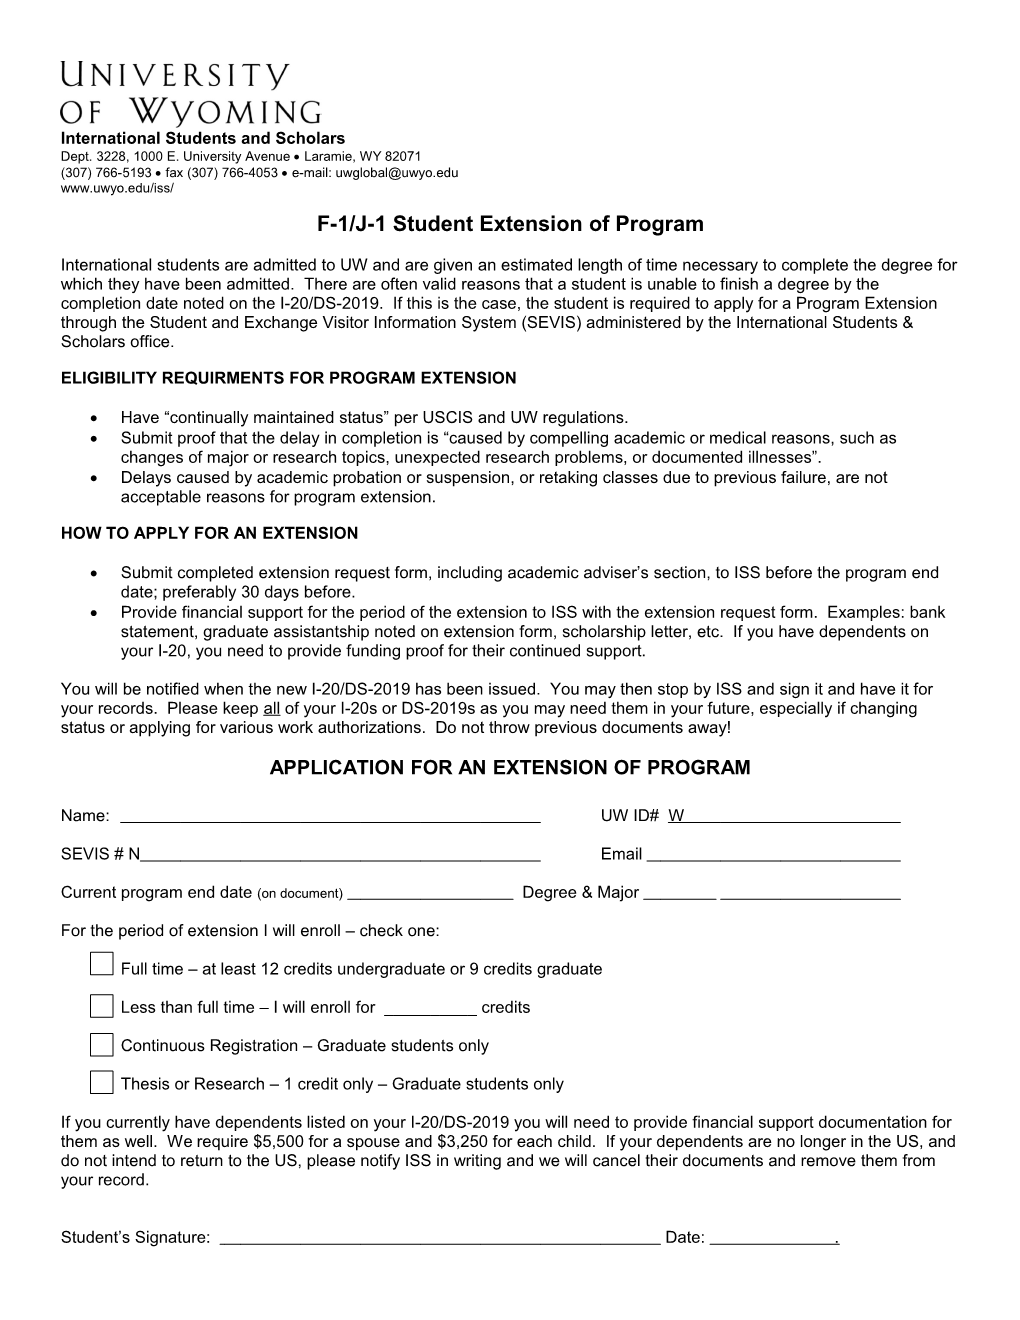 J-1/F-1 Student Extension of Program